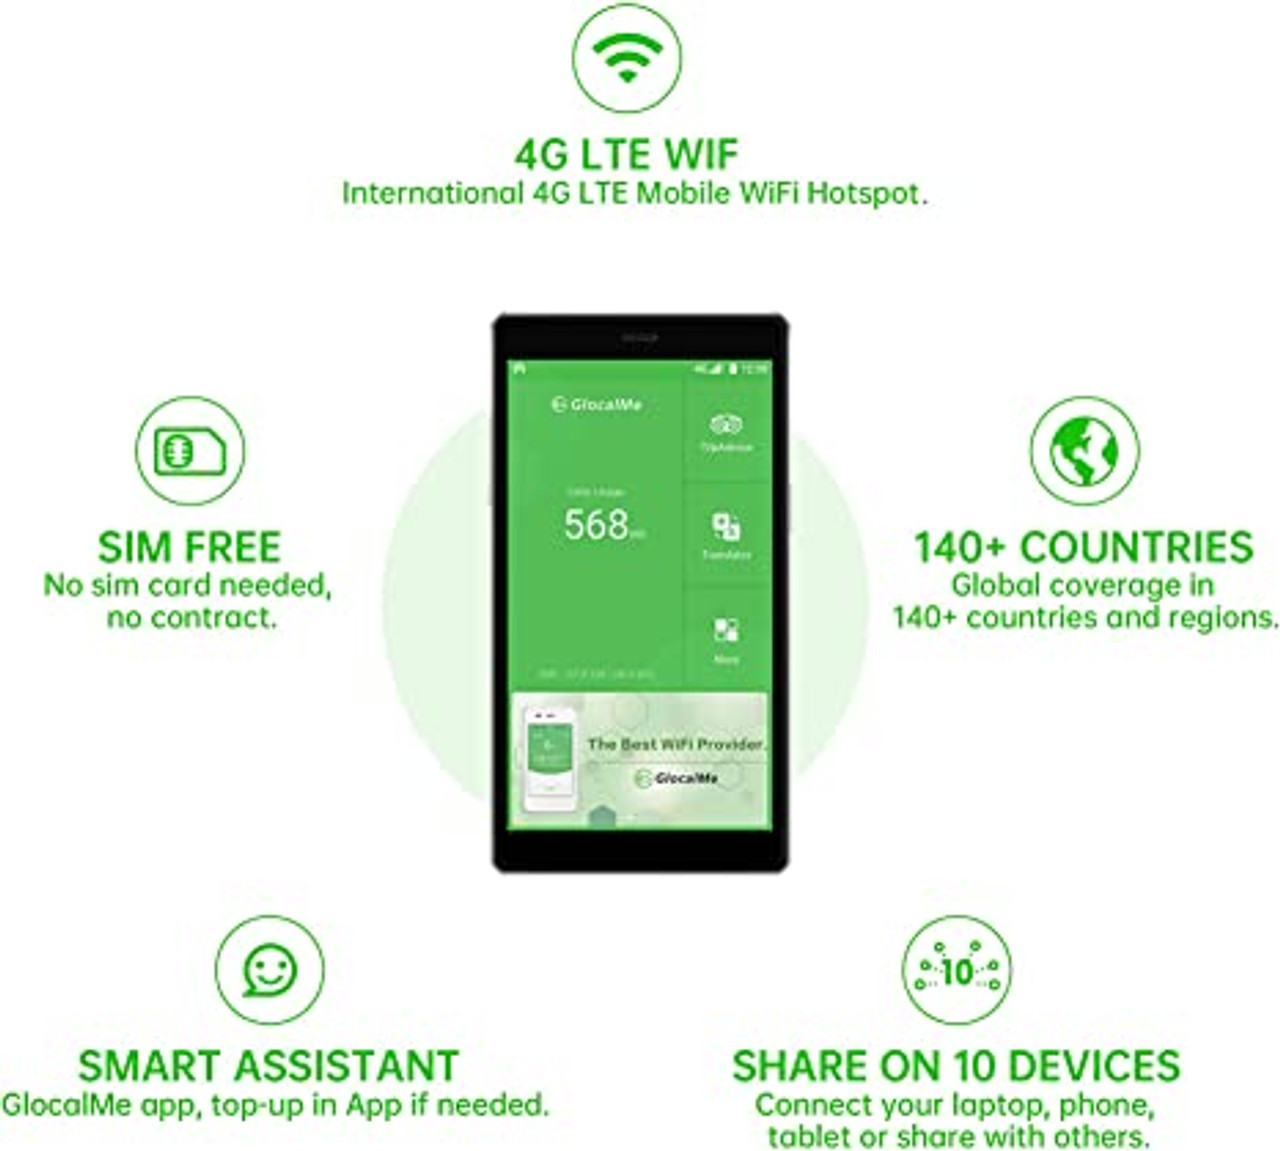 GlocalMe G4 Pro 4G LTE Mobile Hotspot Router, 5” Touch Screen LCD